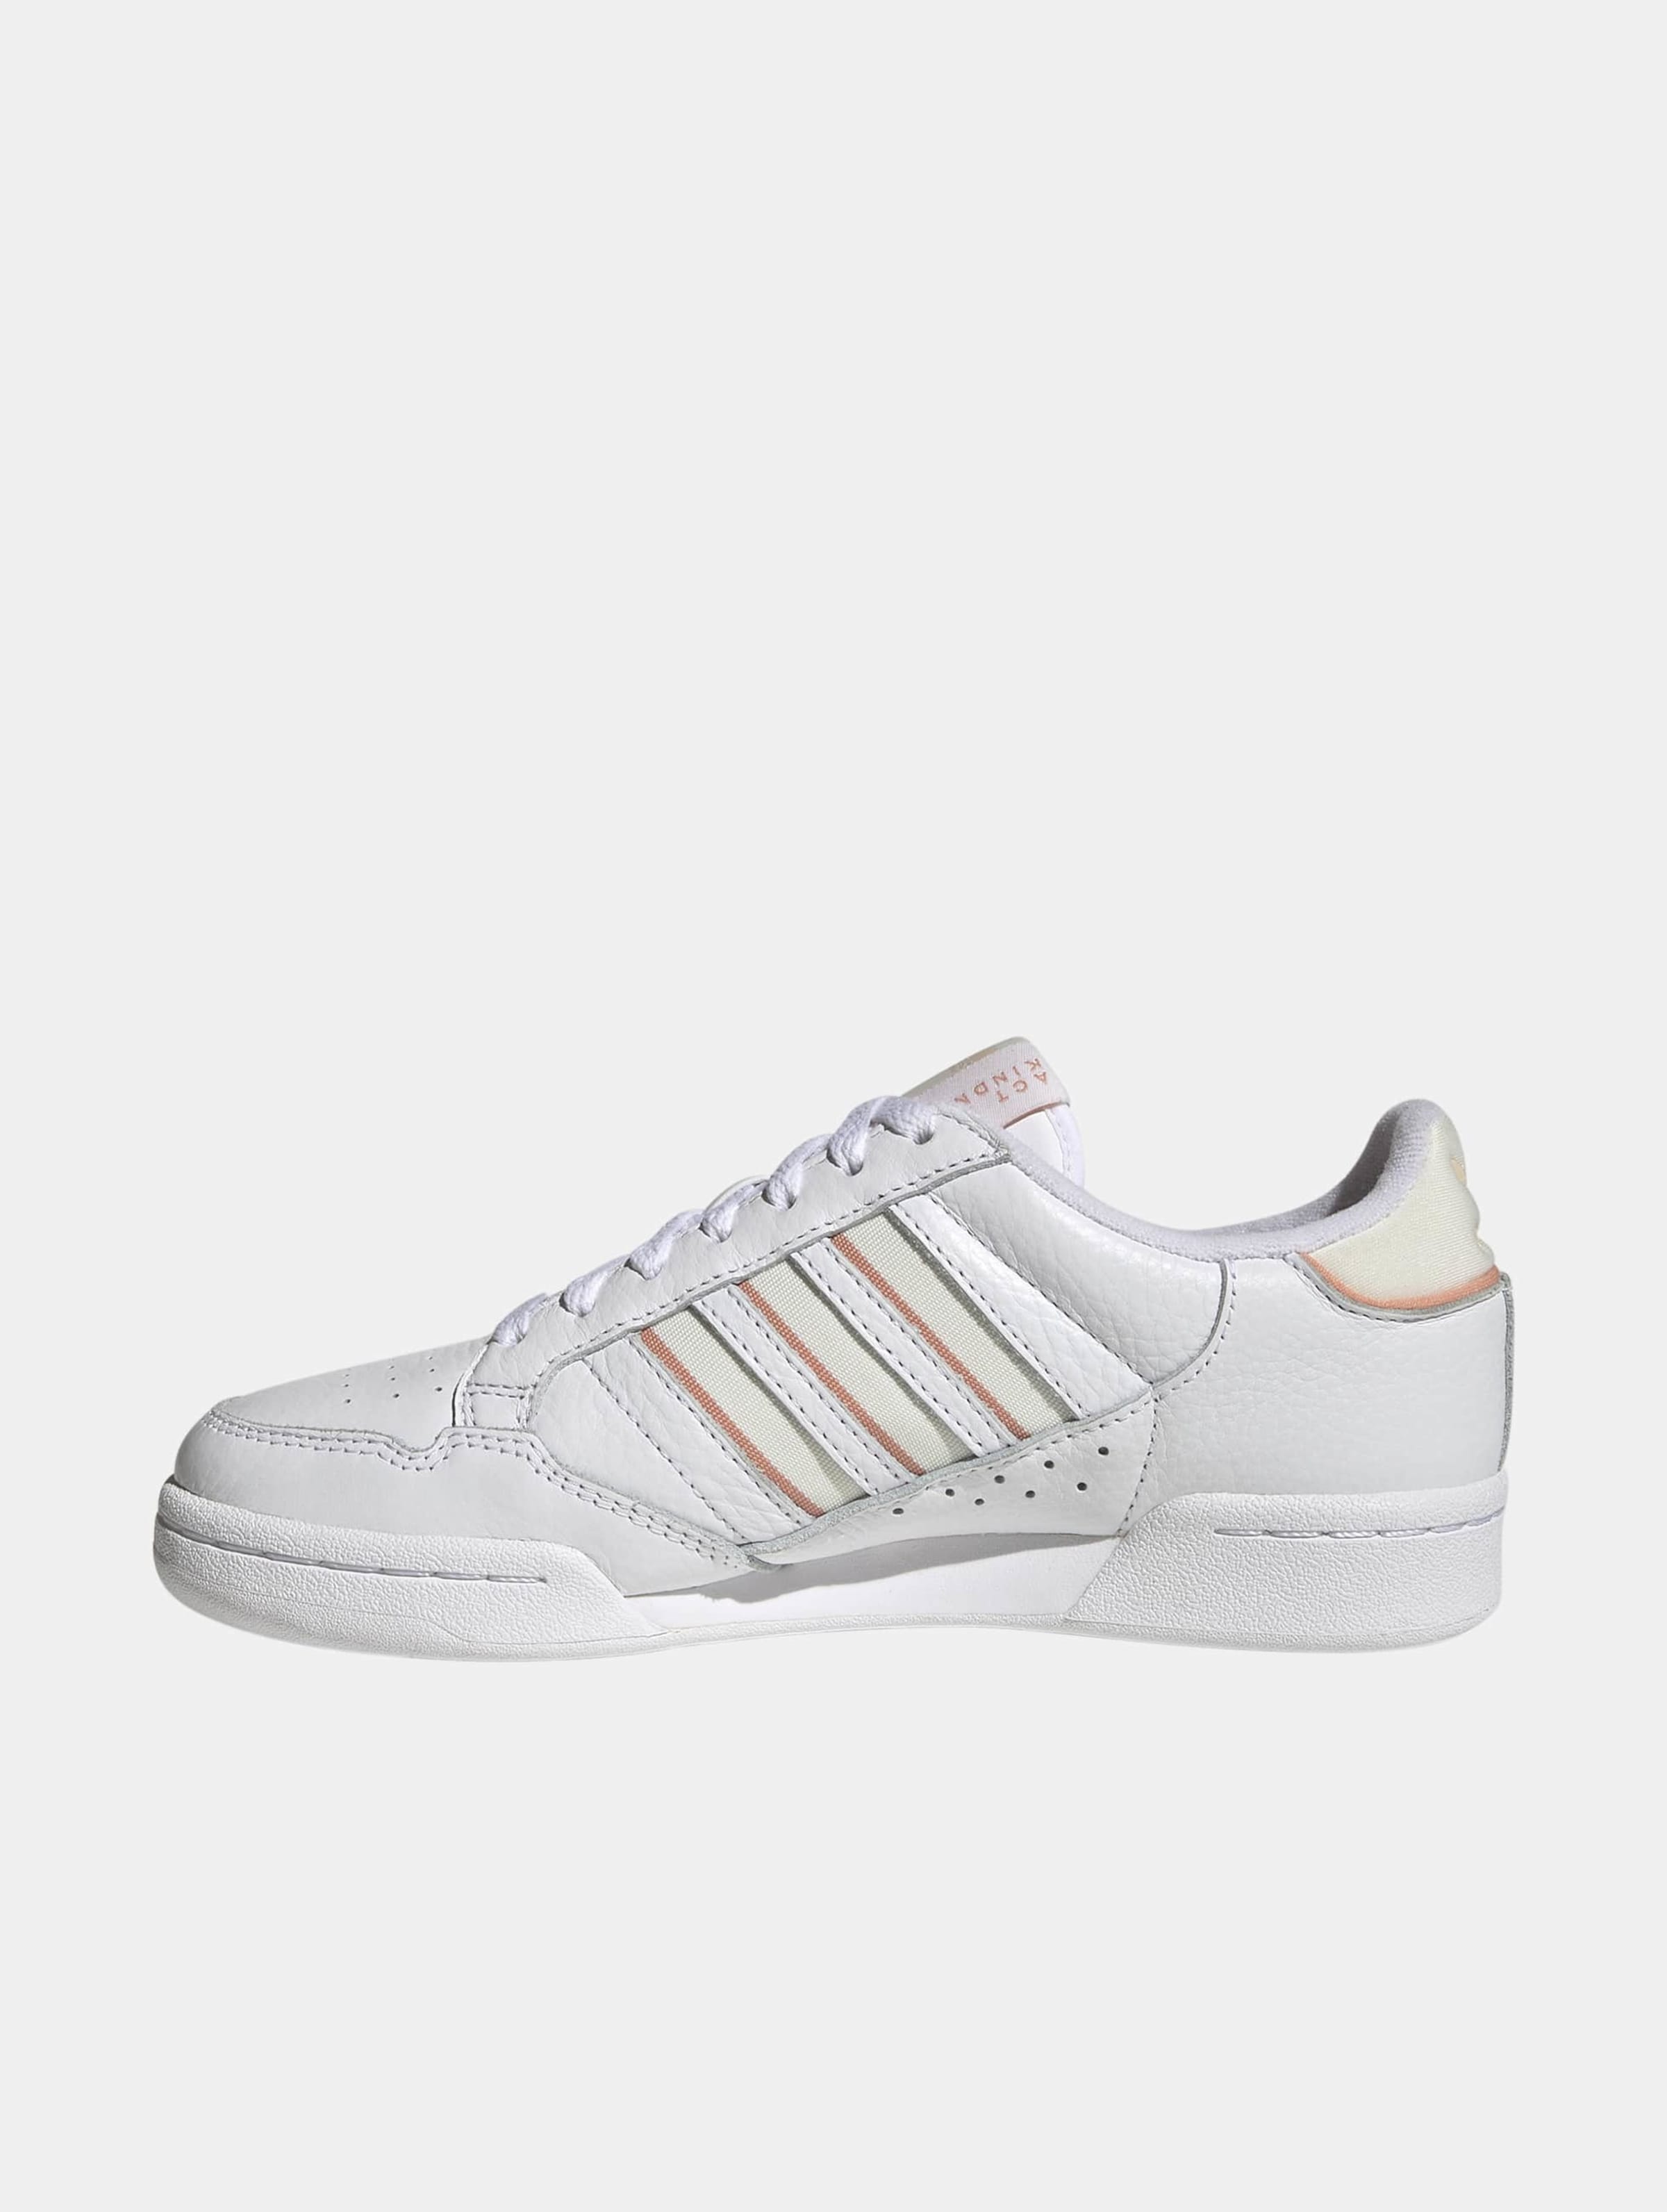 adidas Originals Adidas Continental 80 Stripes Schuhe Vrouwen op kleur wit, Maat 38